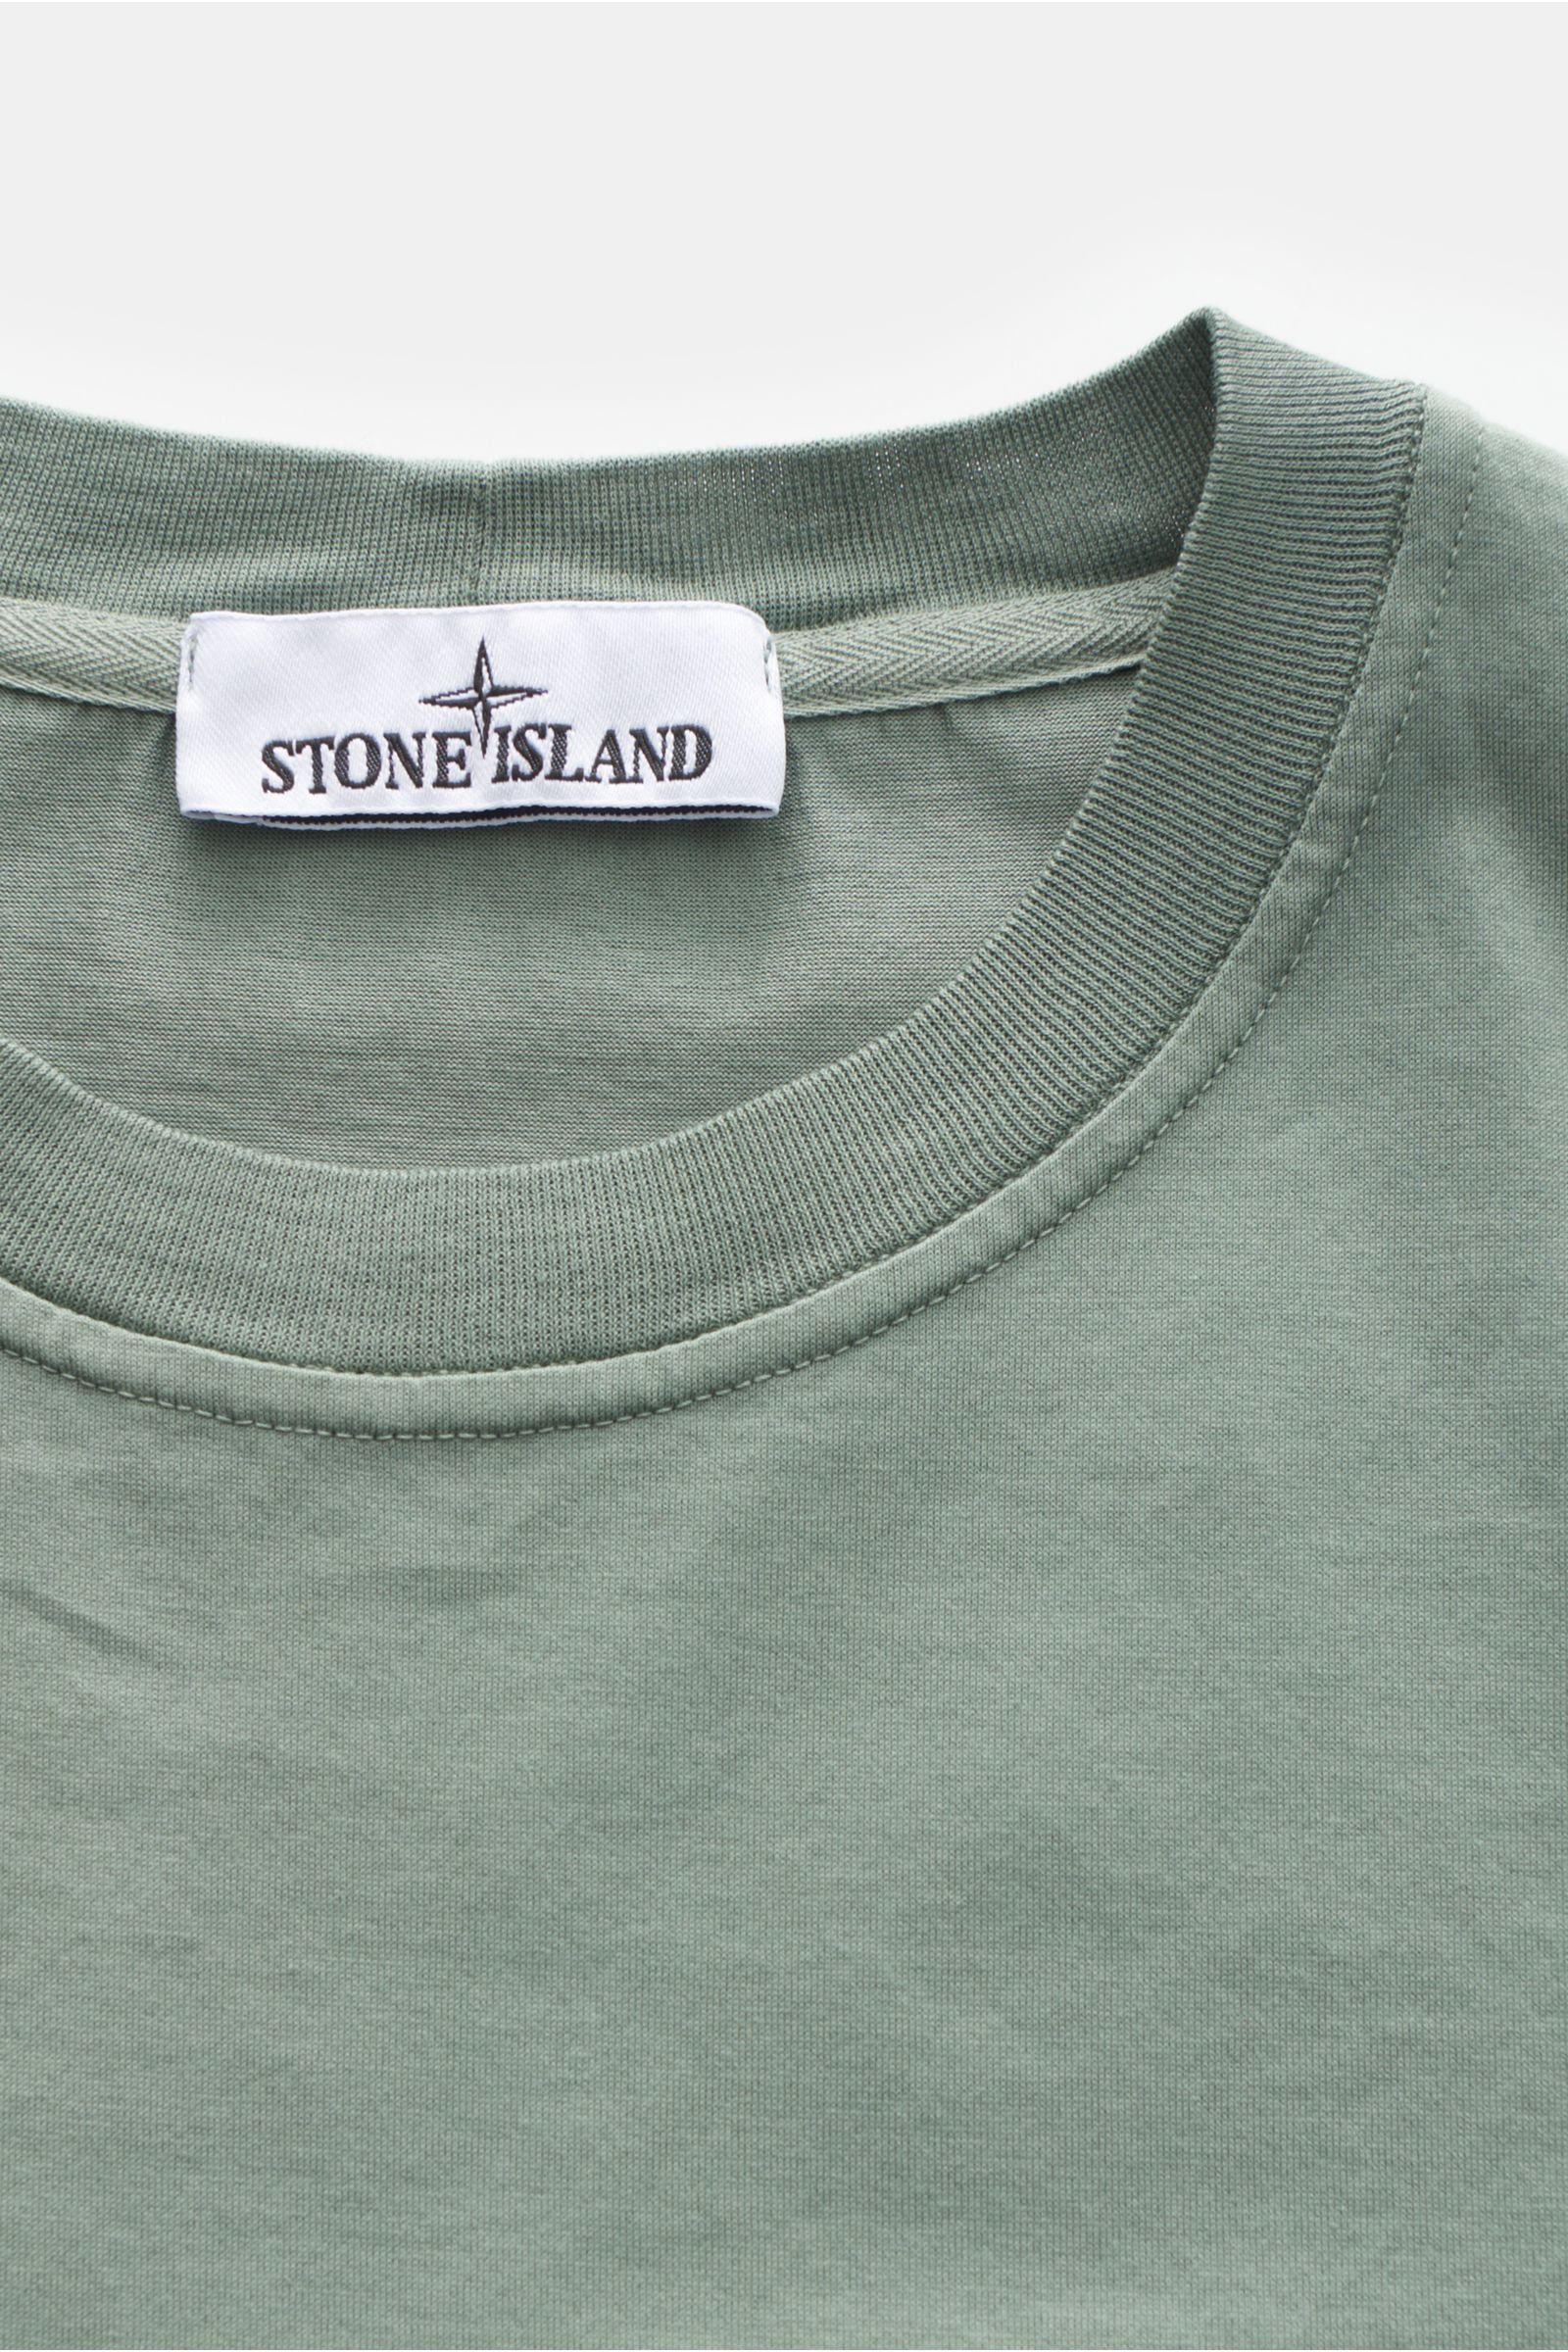 STONE ISLAND crew neck T-shirt 'Stellina' grey-green | BRAUN Hamburg